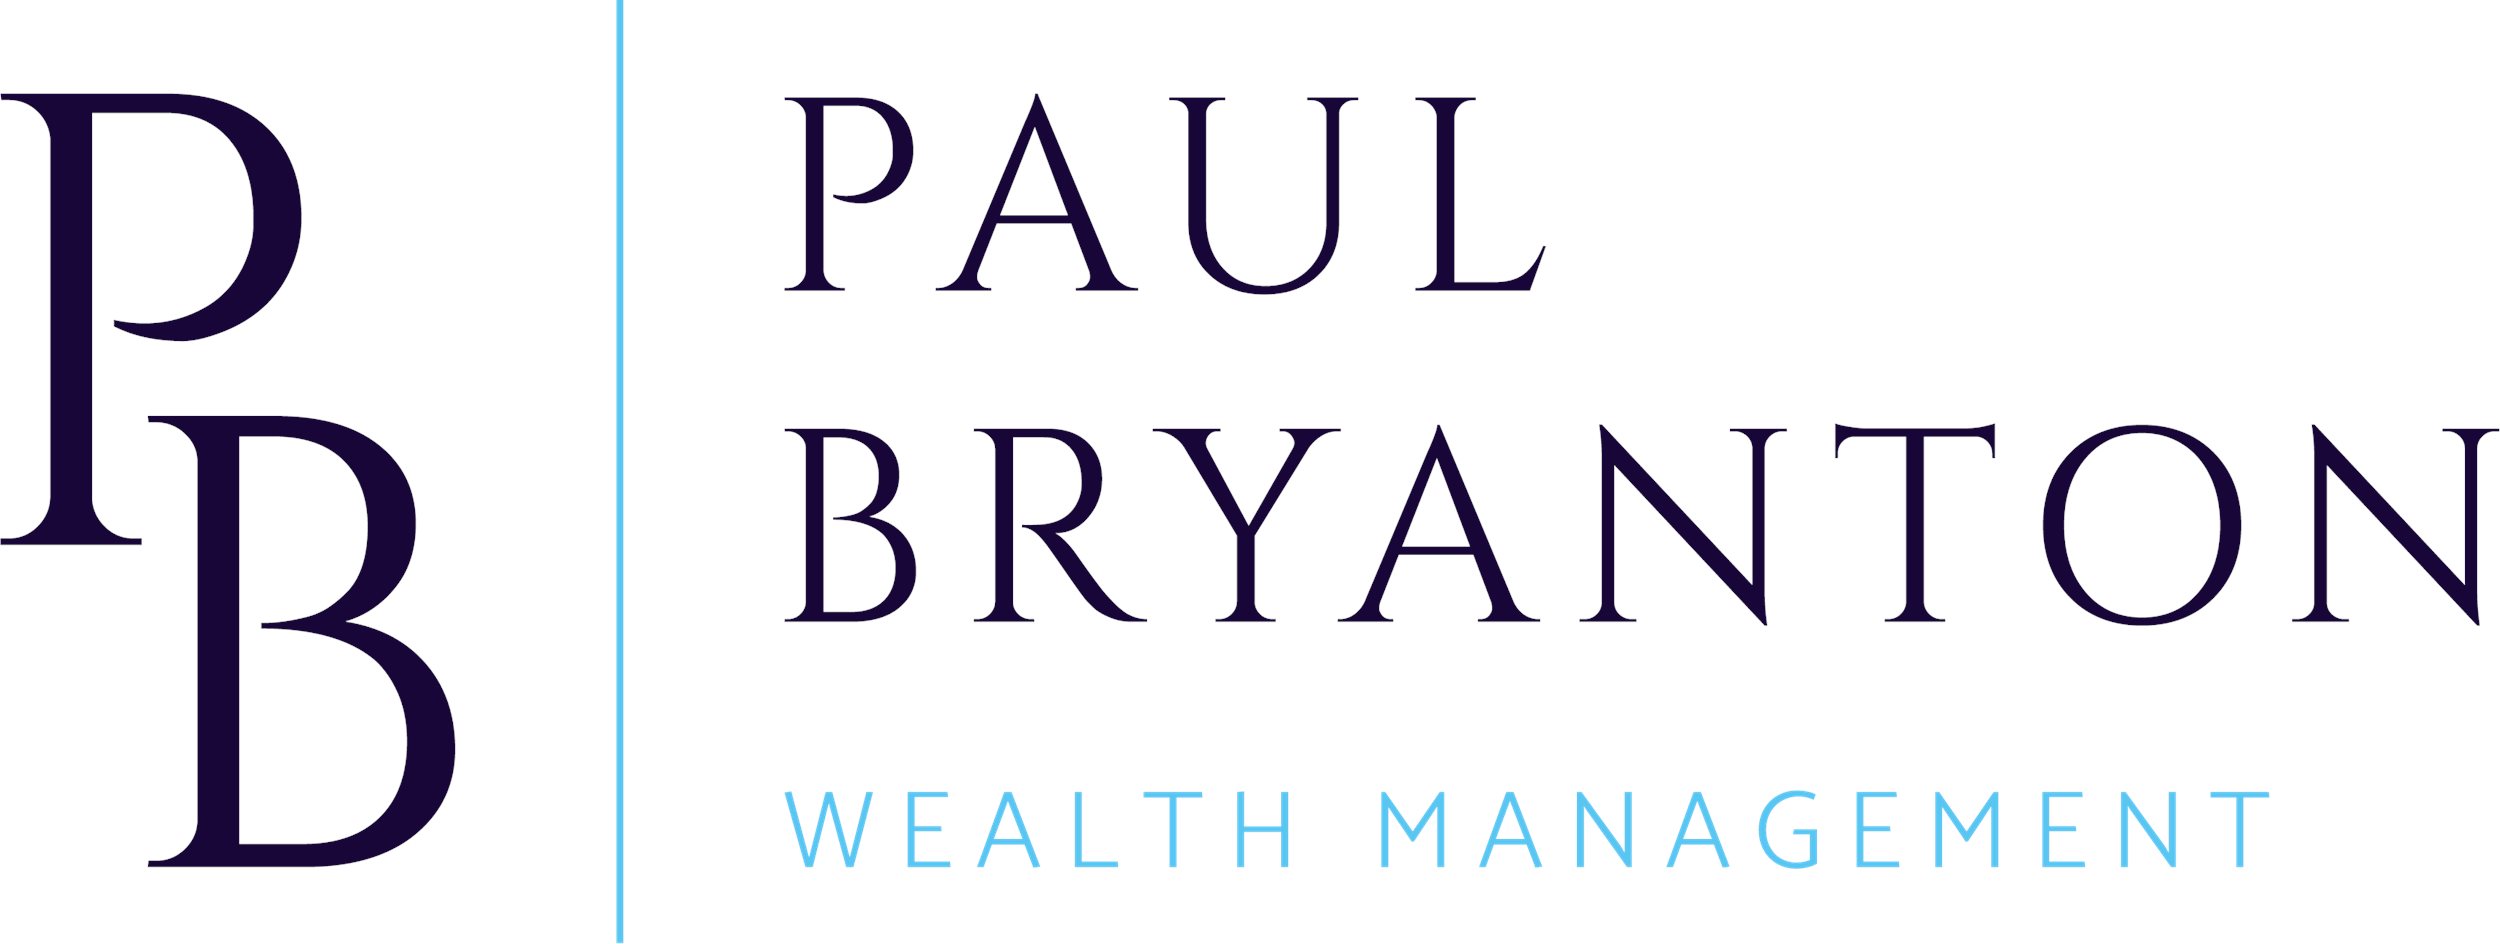 Paul Bryanton Wealth Management